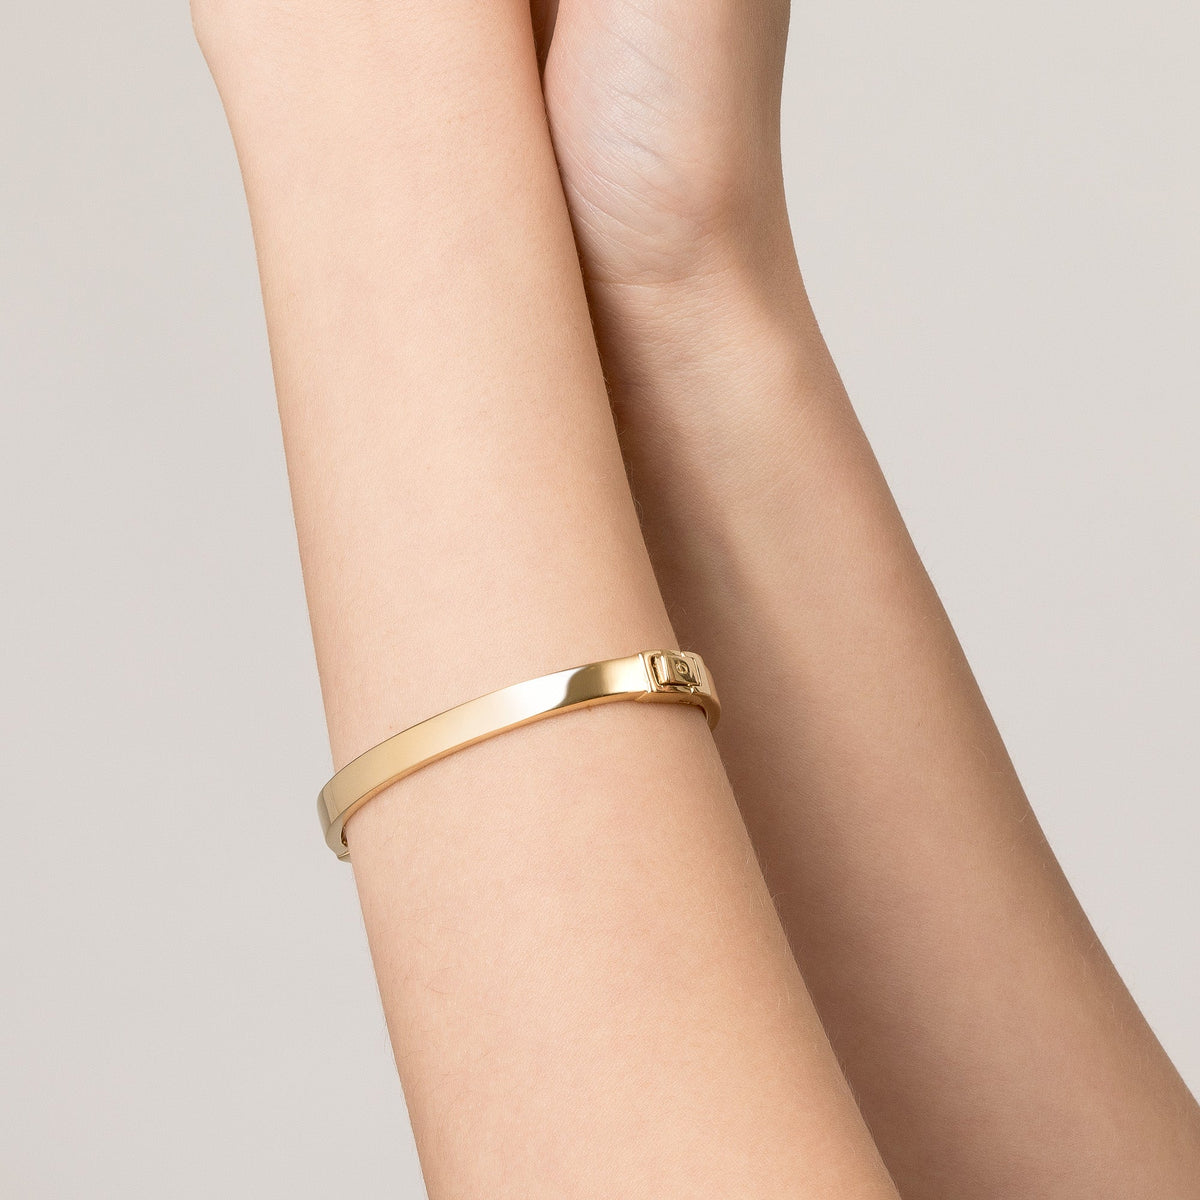 Beautiful Female Golden Wrist Bracelet Hanging Stock Photo 1060261817   Shutterstock